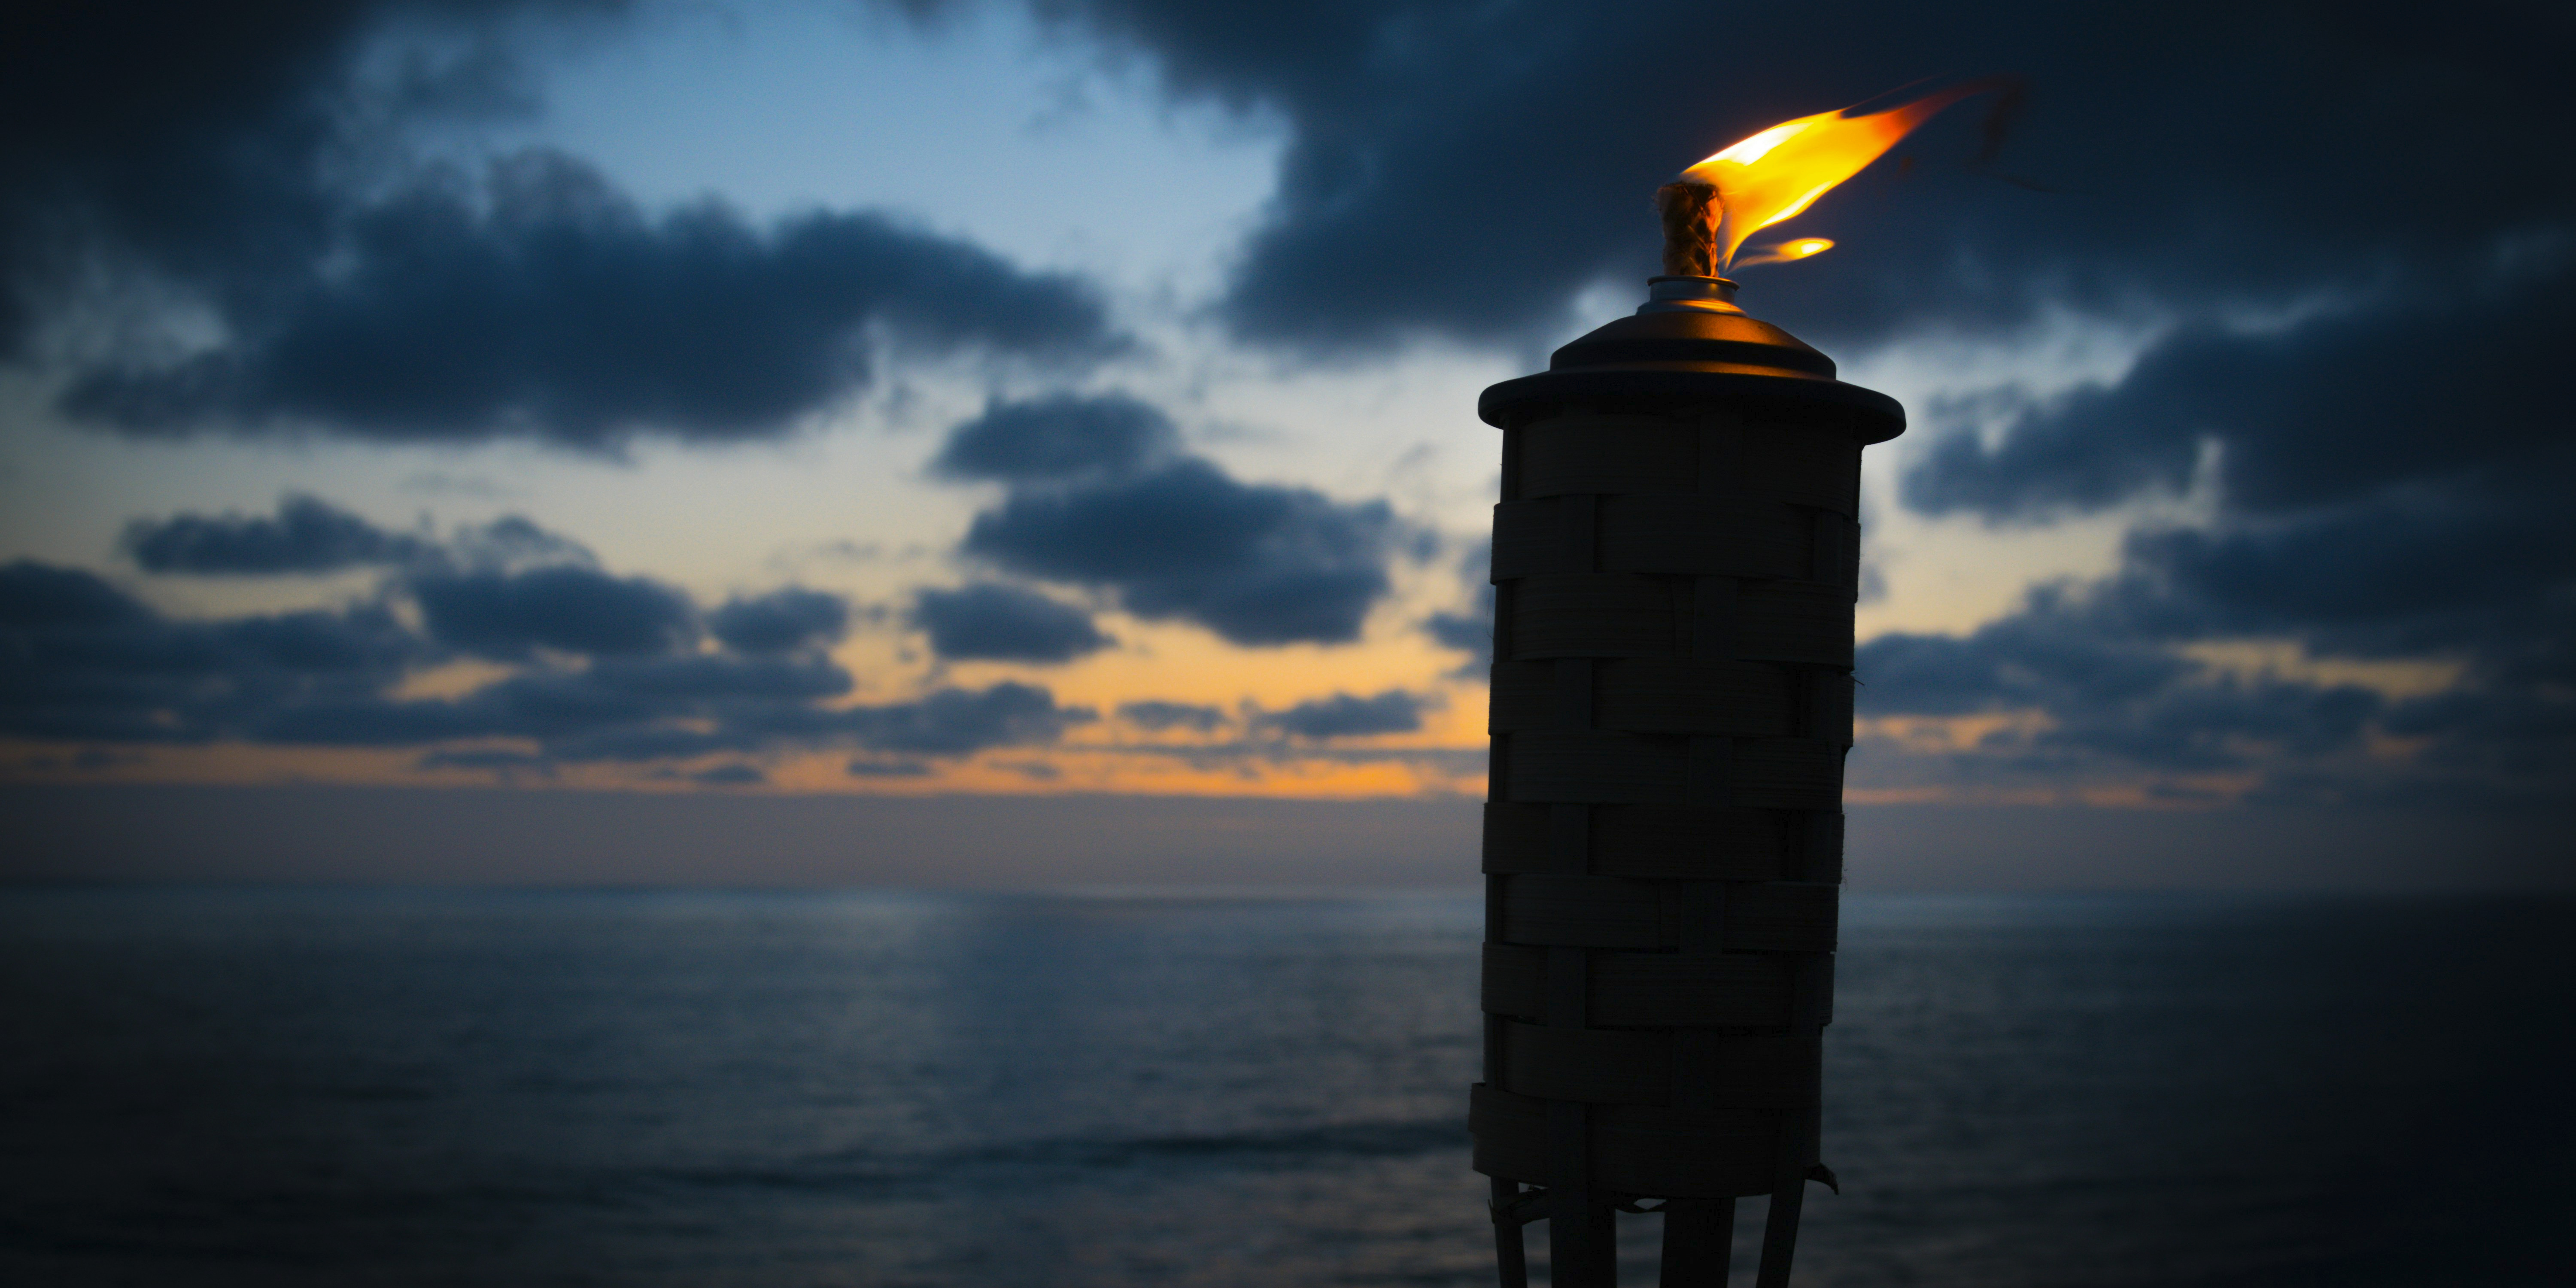 Lighted tiki torch near sea at night